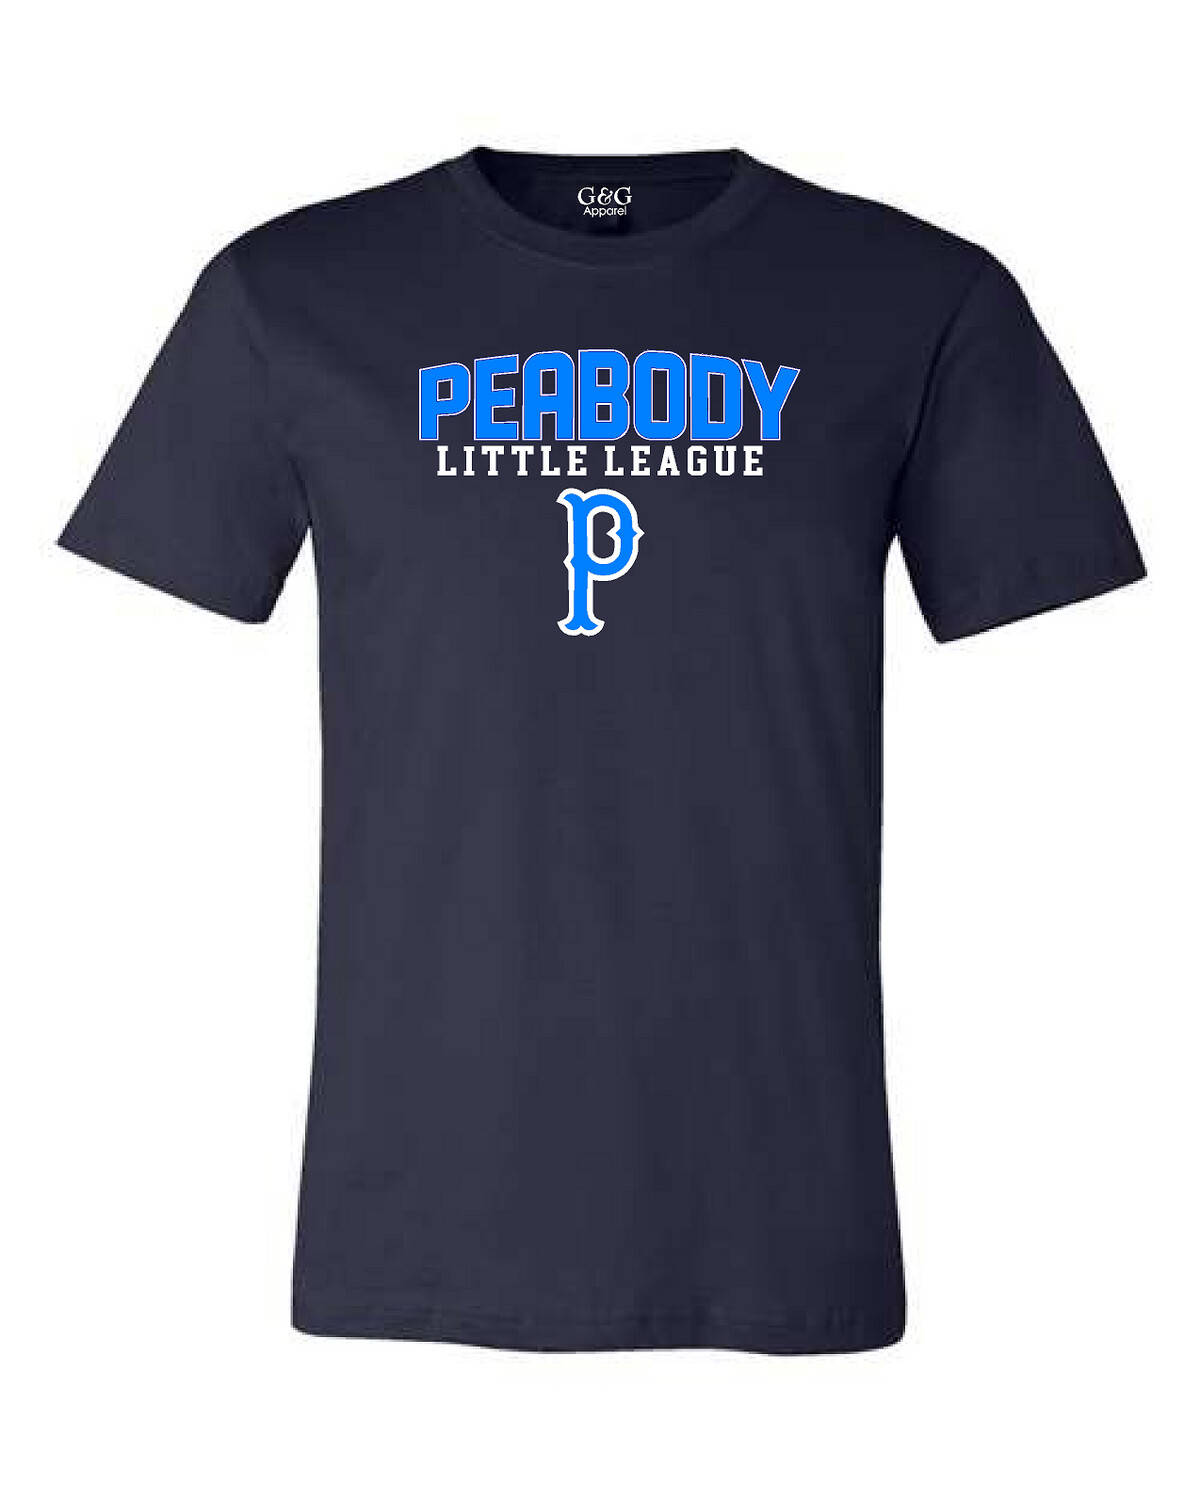 Unisex Adult 50/50 Dri-Power T-Shirt W/ Peabody Little League Logo